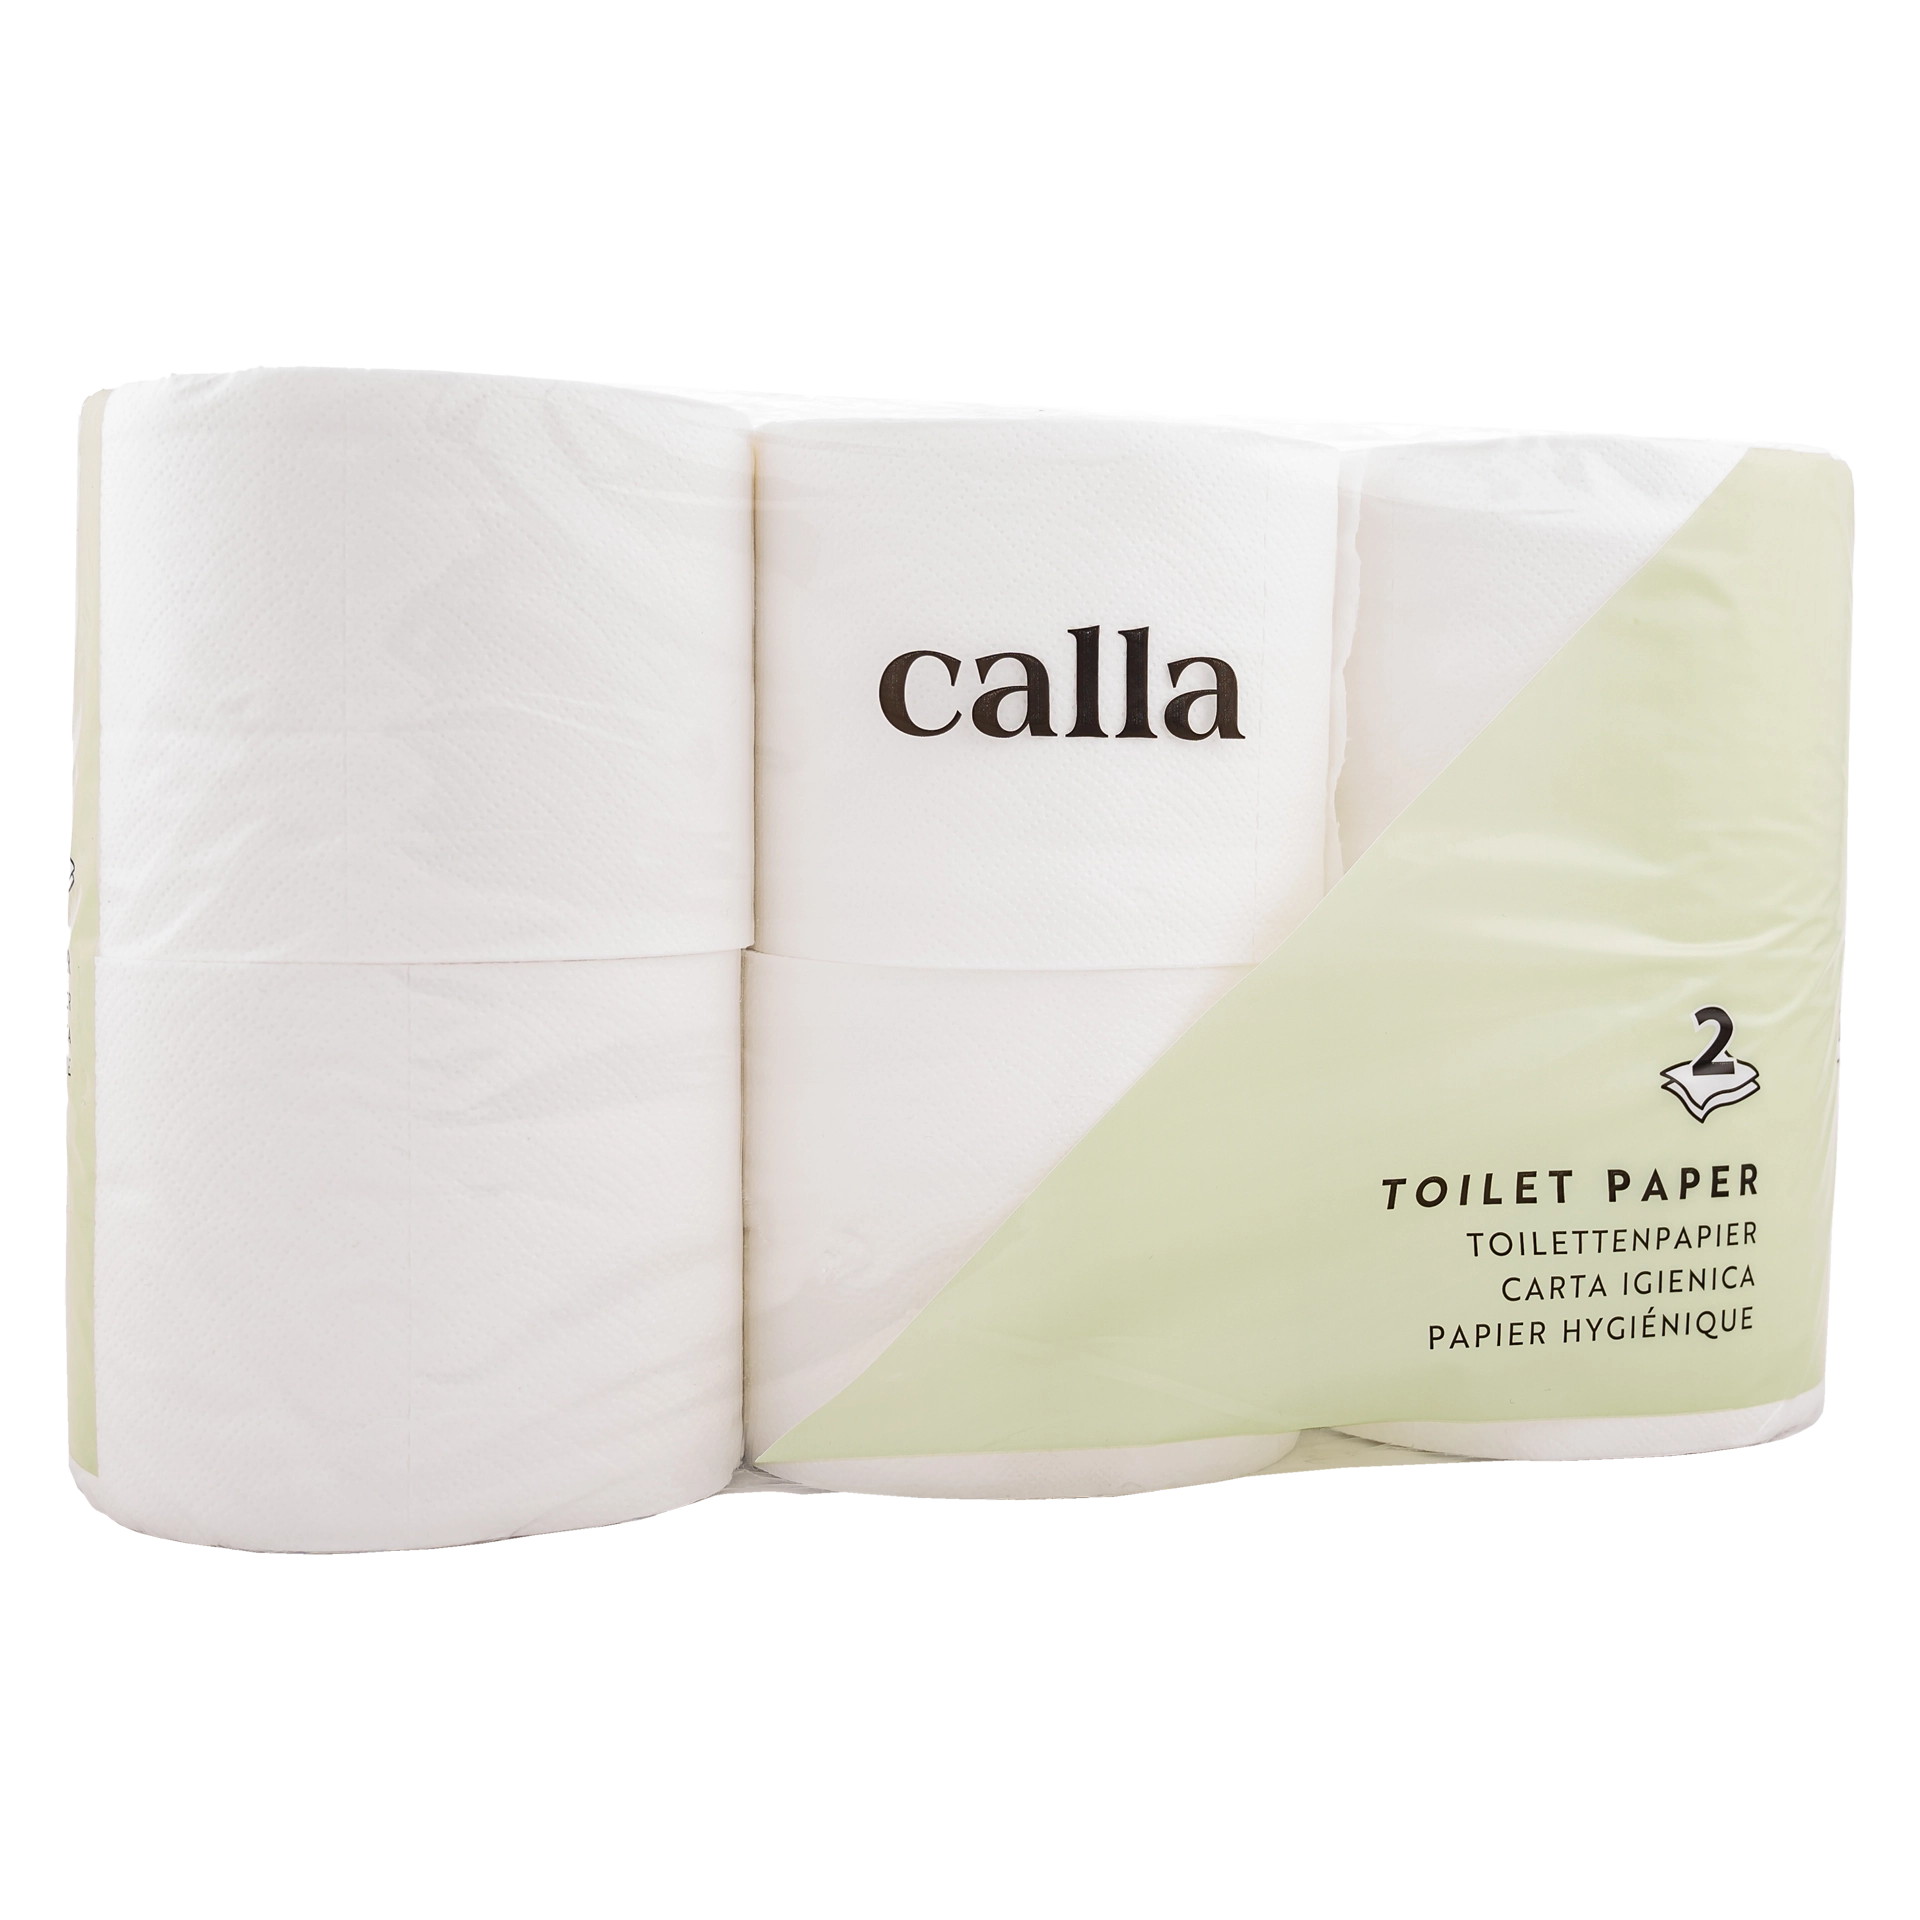 Toilettenpapier | Calla22 weiß 2lg. 280 Abrisse/12 cm